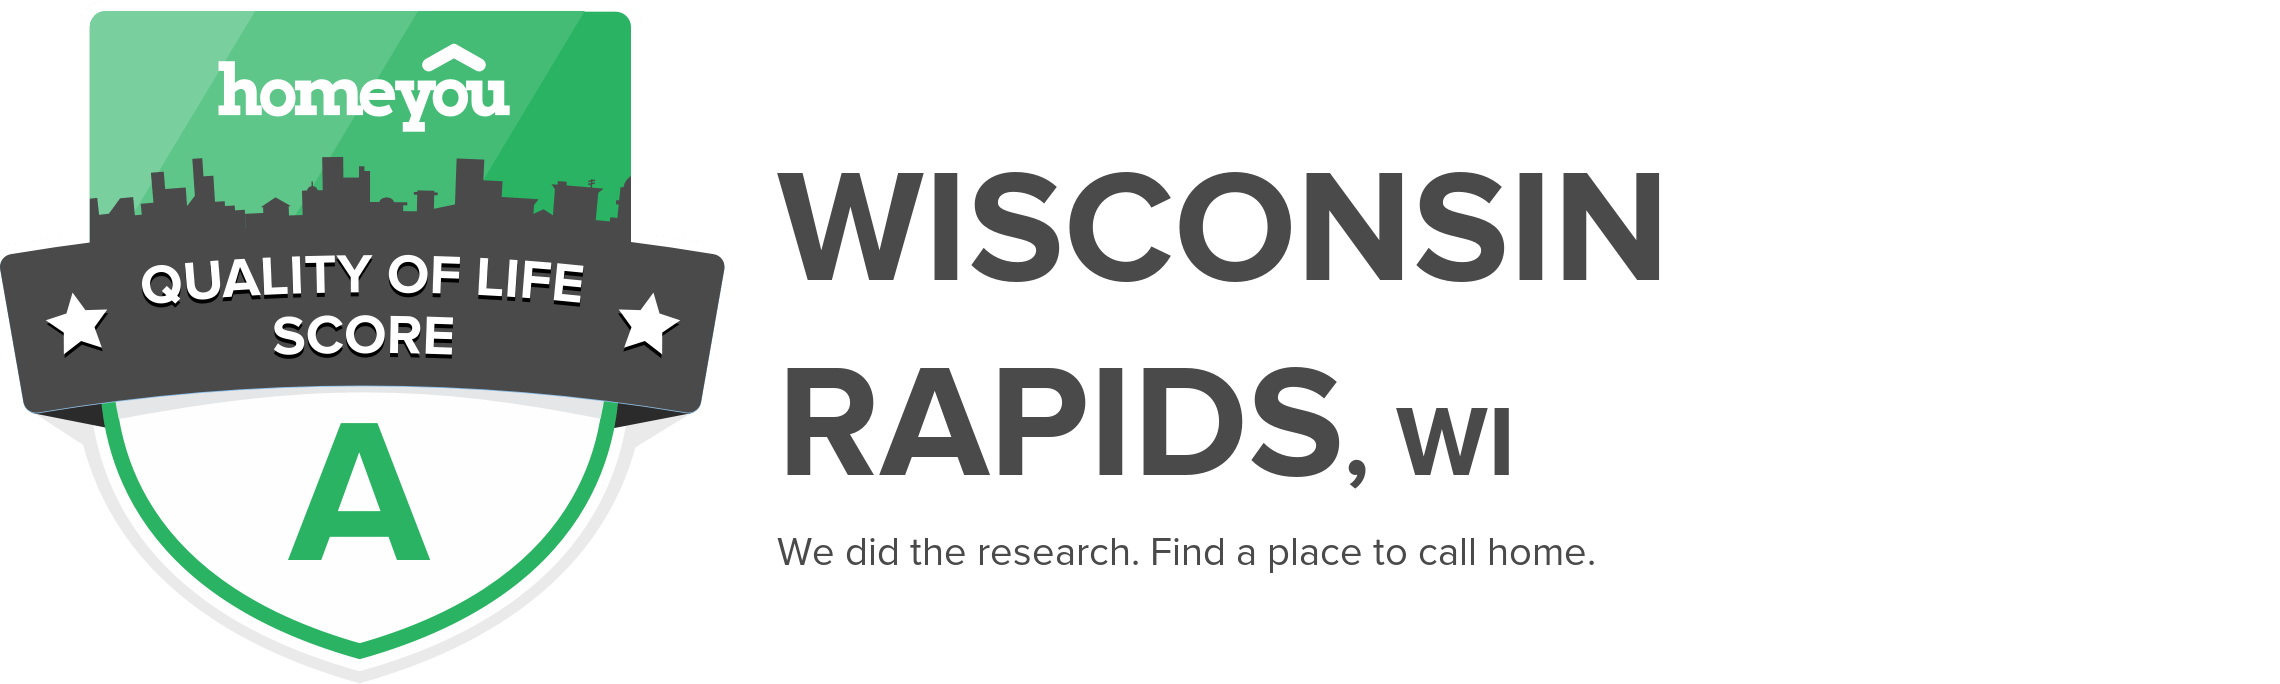 Wisconsin Rapids, WI